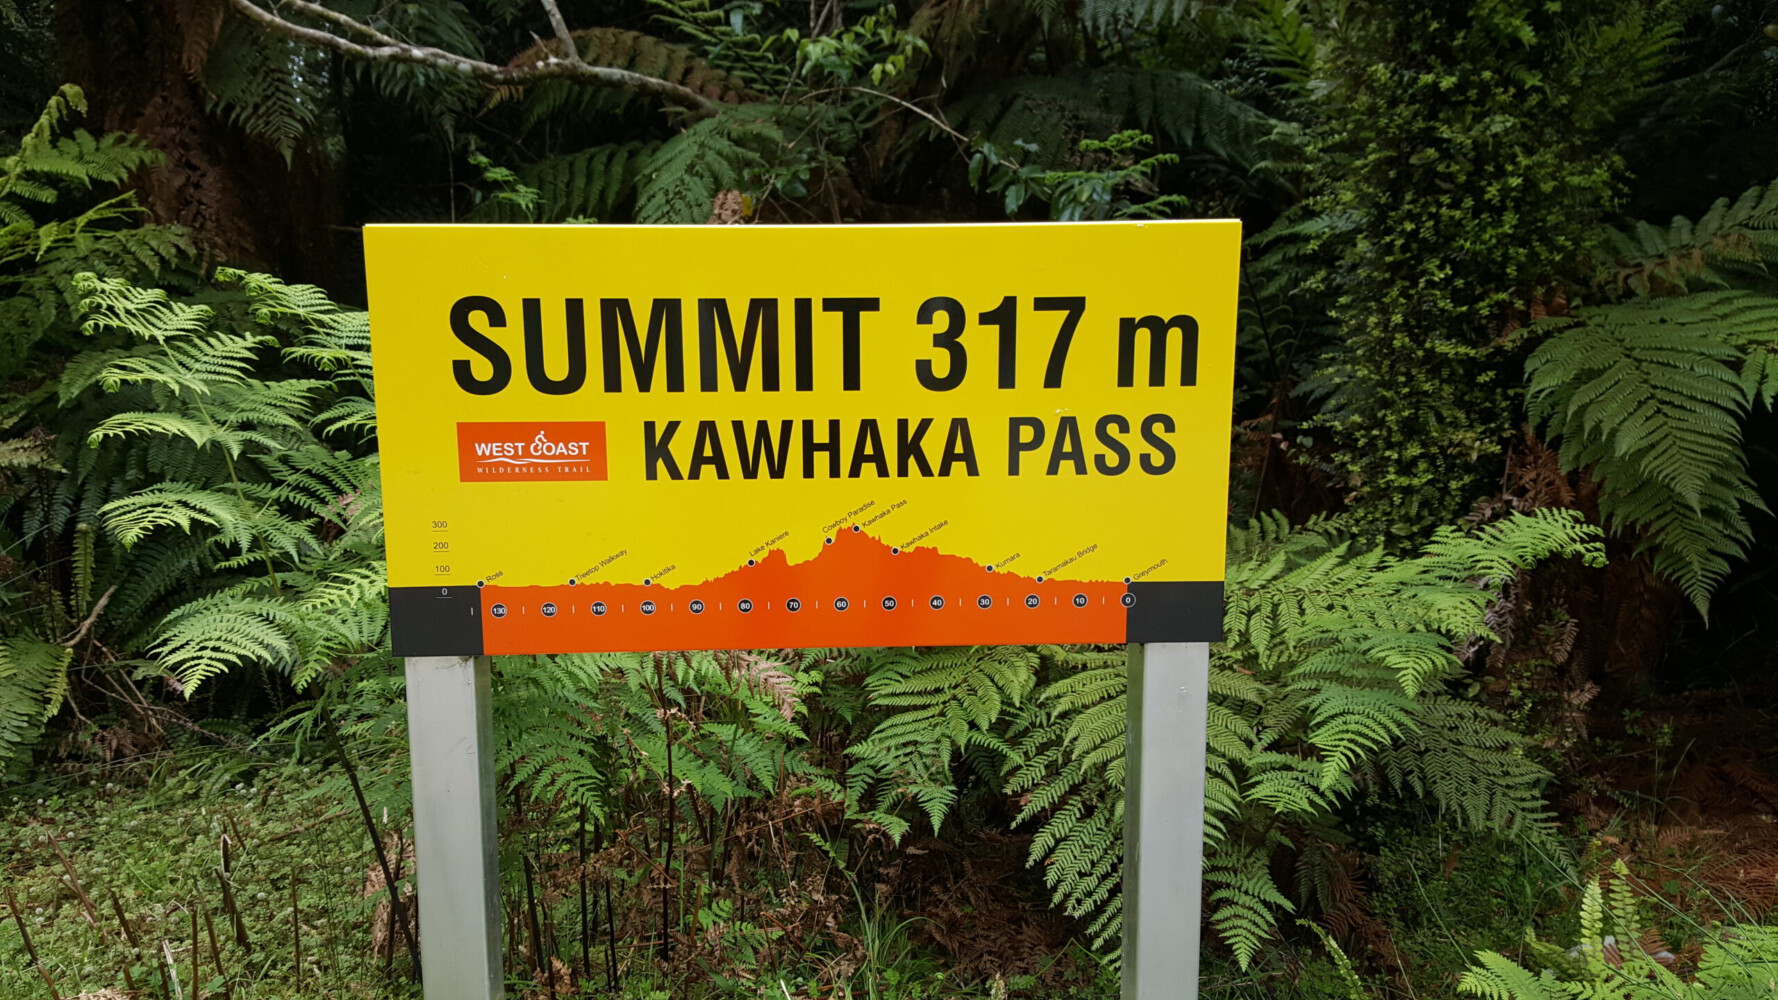 Kawhaka Pass Summit sign